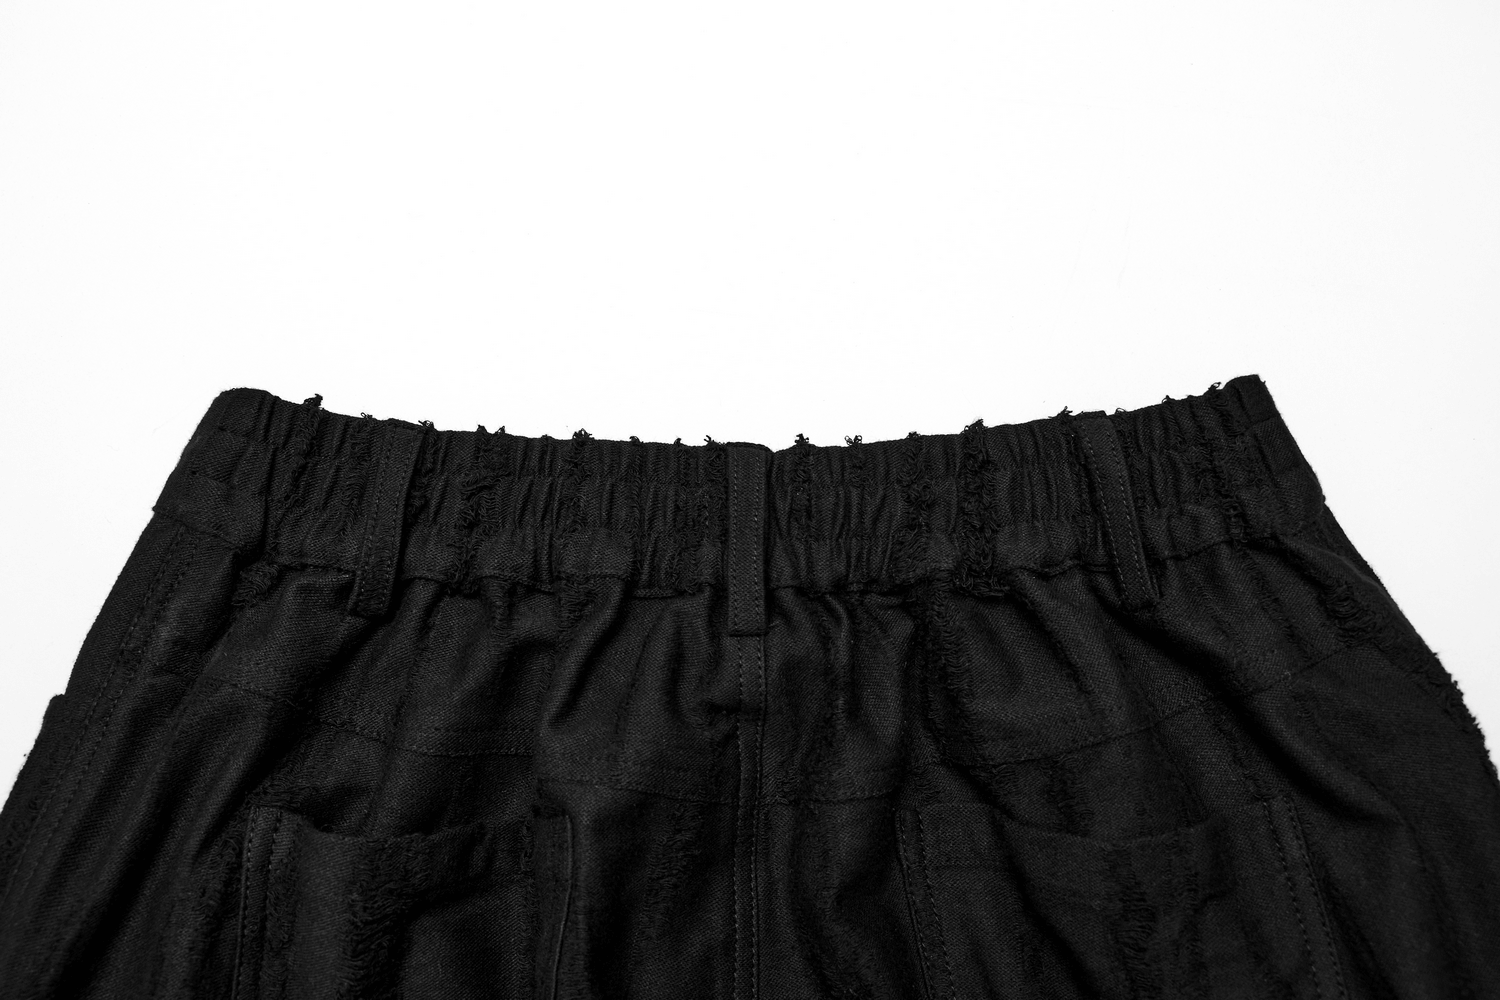 Loose-Fit Black Gothic Streetwear Cargo Pants